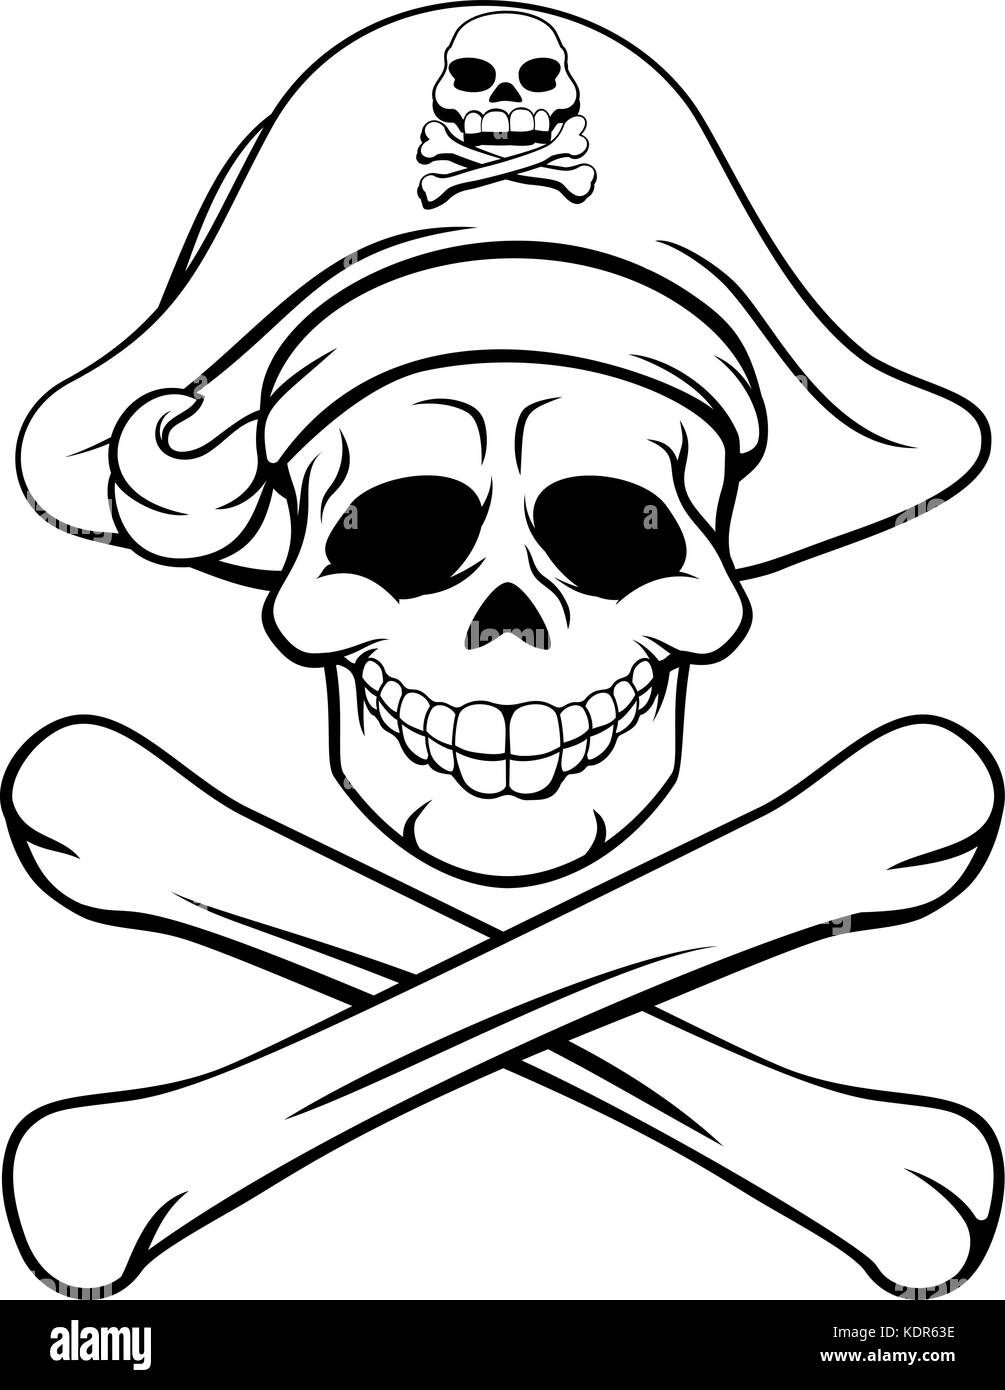 Skull and Crossbones Pirate Cartoon Stock Vector Image & Art - Alamy